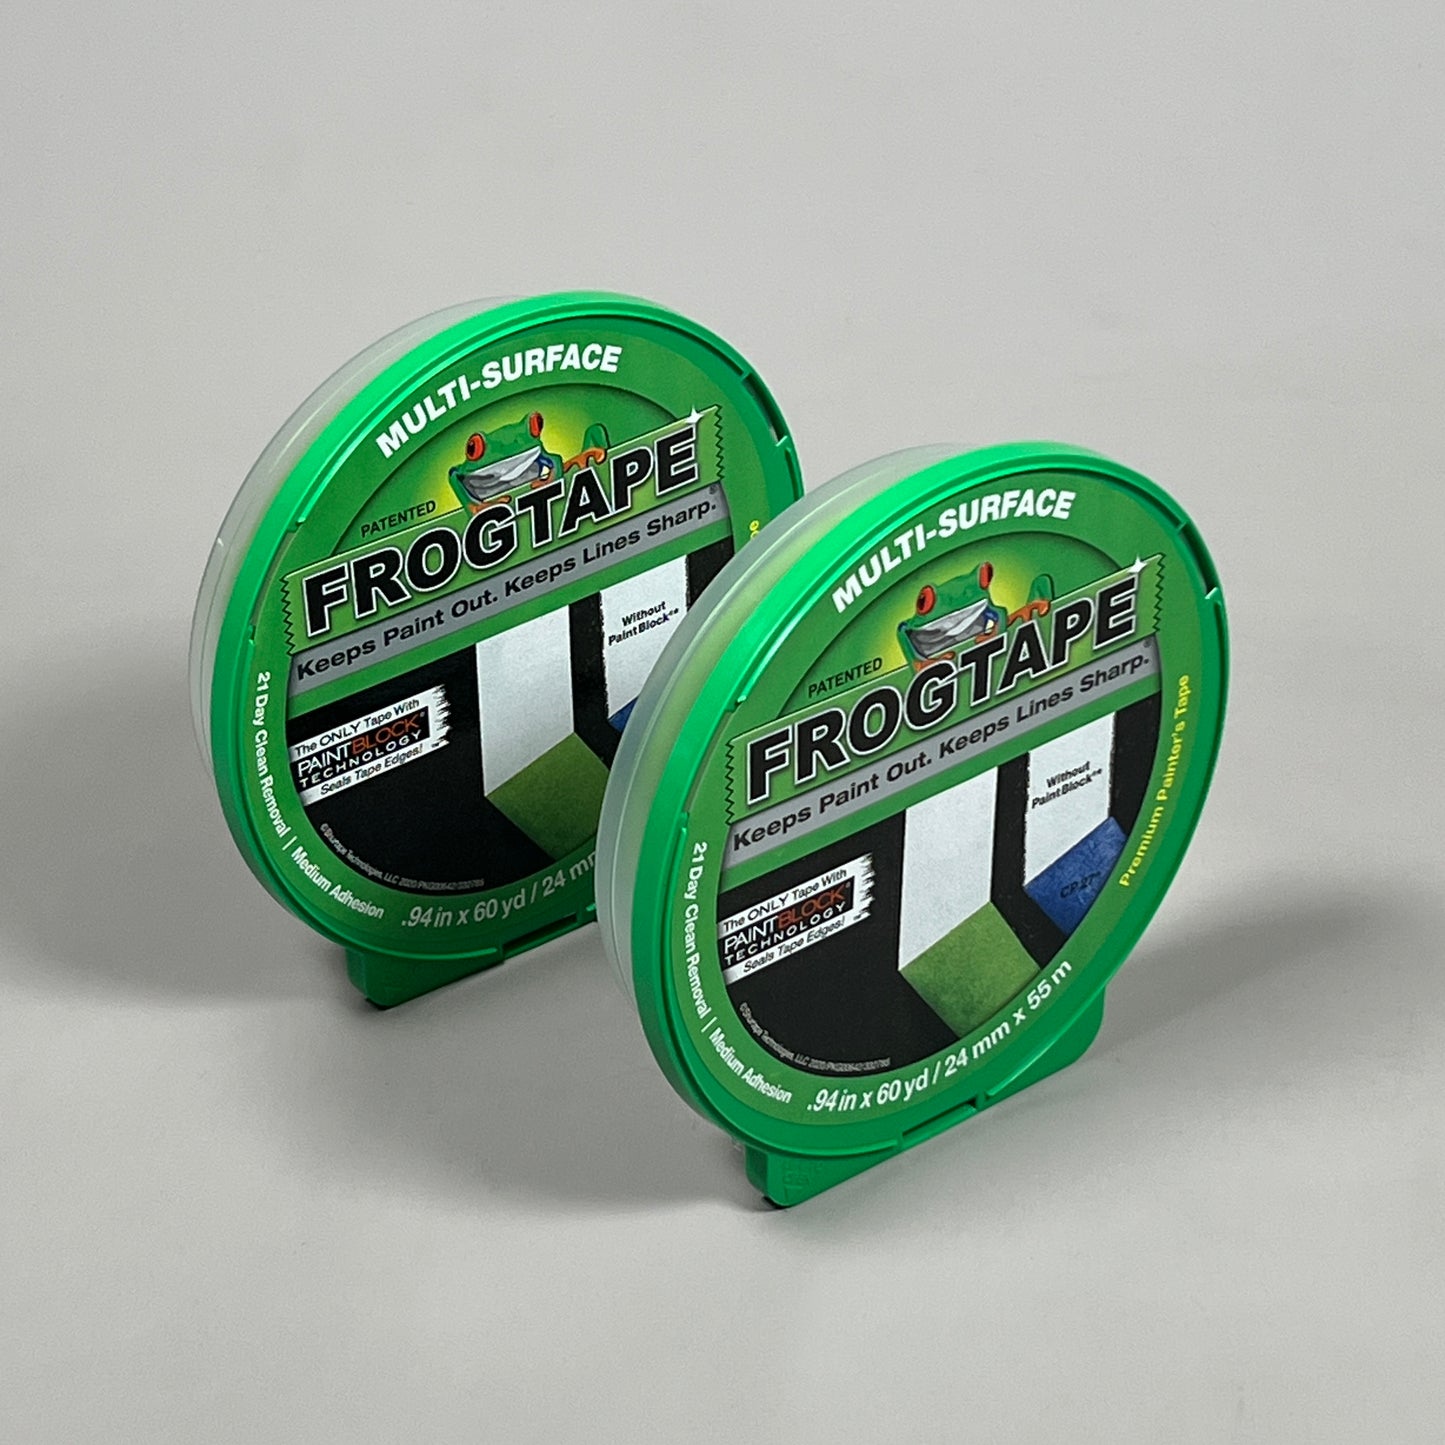 2-PK SHURTAPE FROGTAPE Multi-Surface Masking Tape Green 0.94 in x 60 yd 332785 (New)